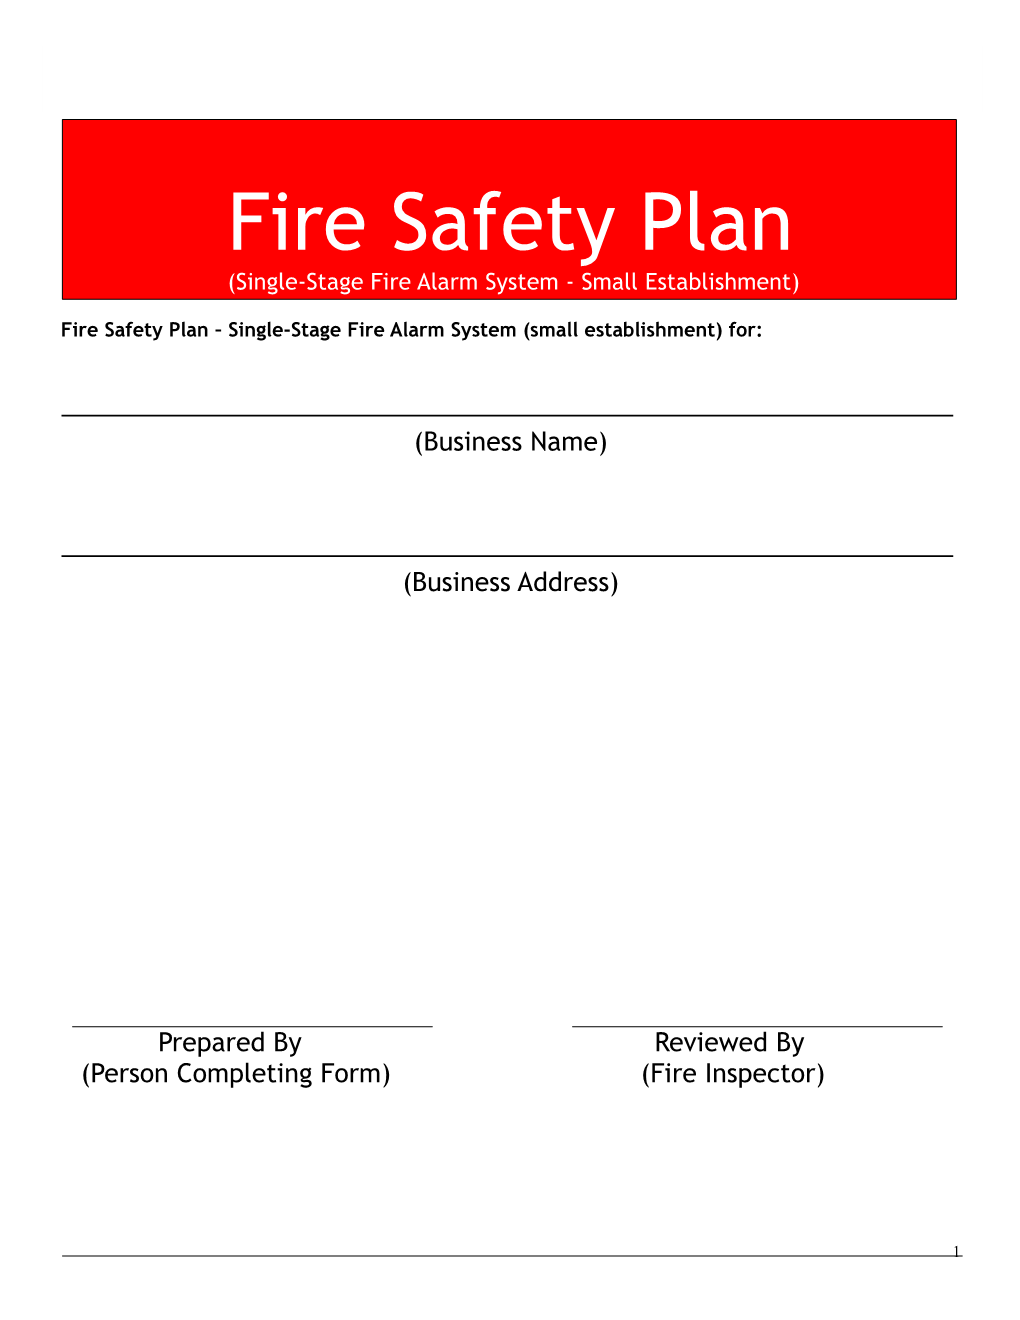 Single-Stage Fire Alarm System - Small Establishment s1